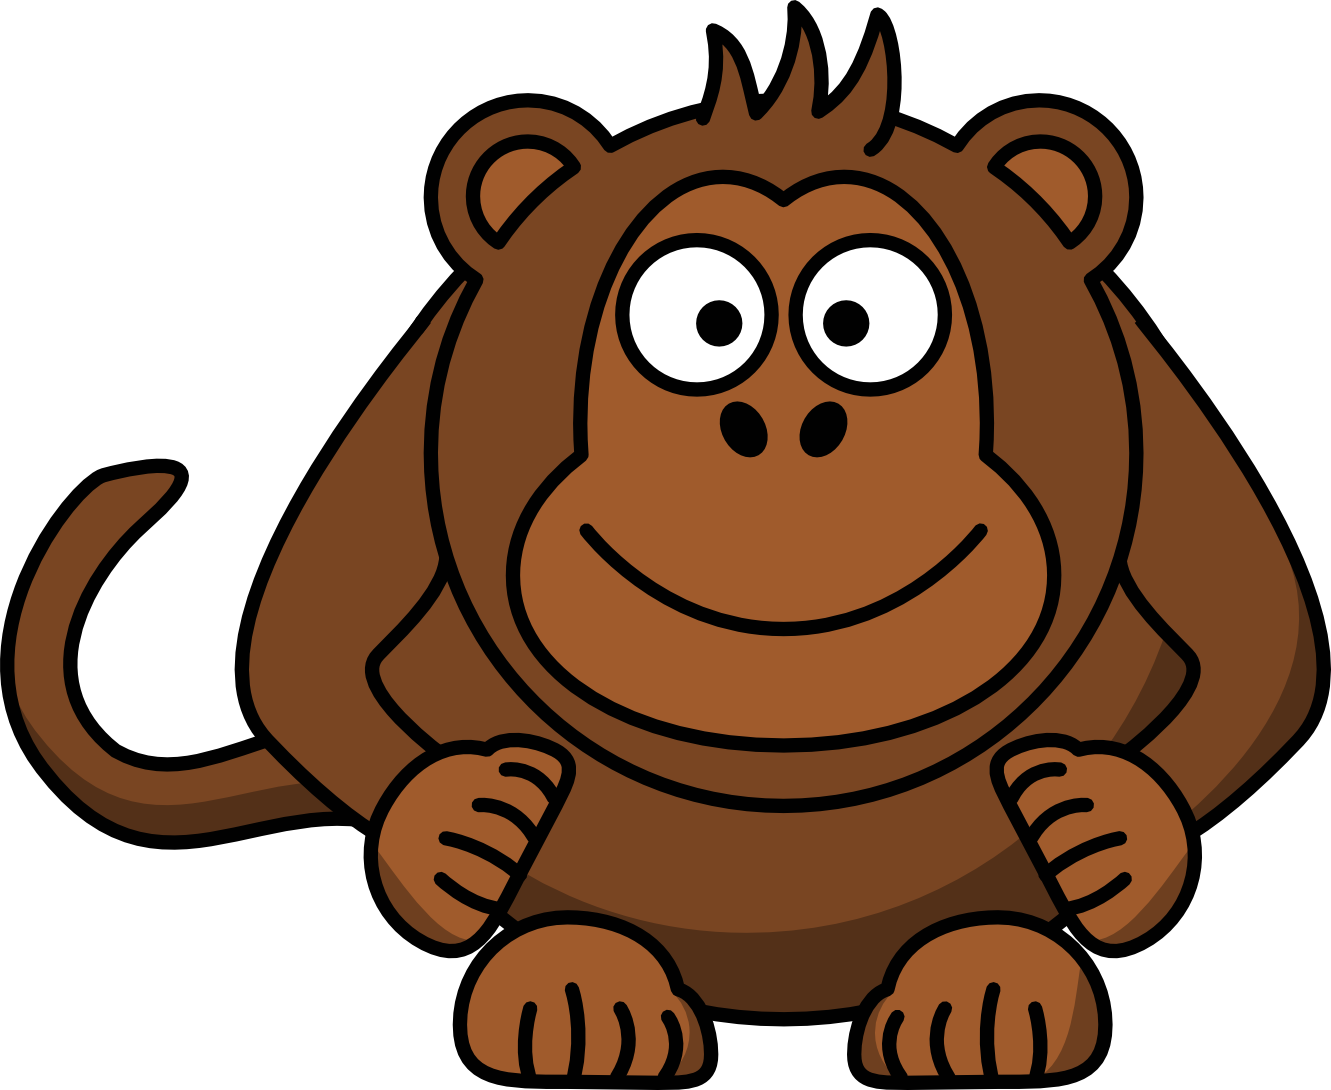 Monkey cartoon free clipart images